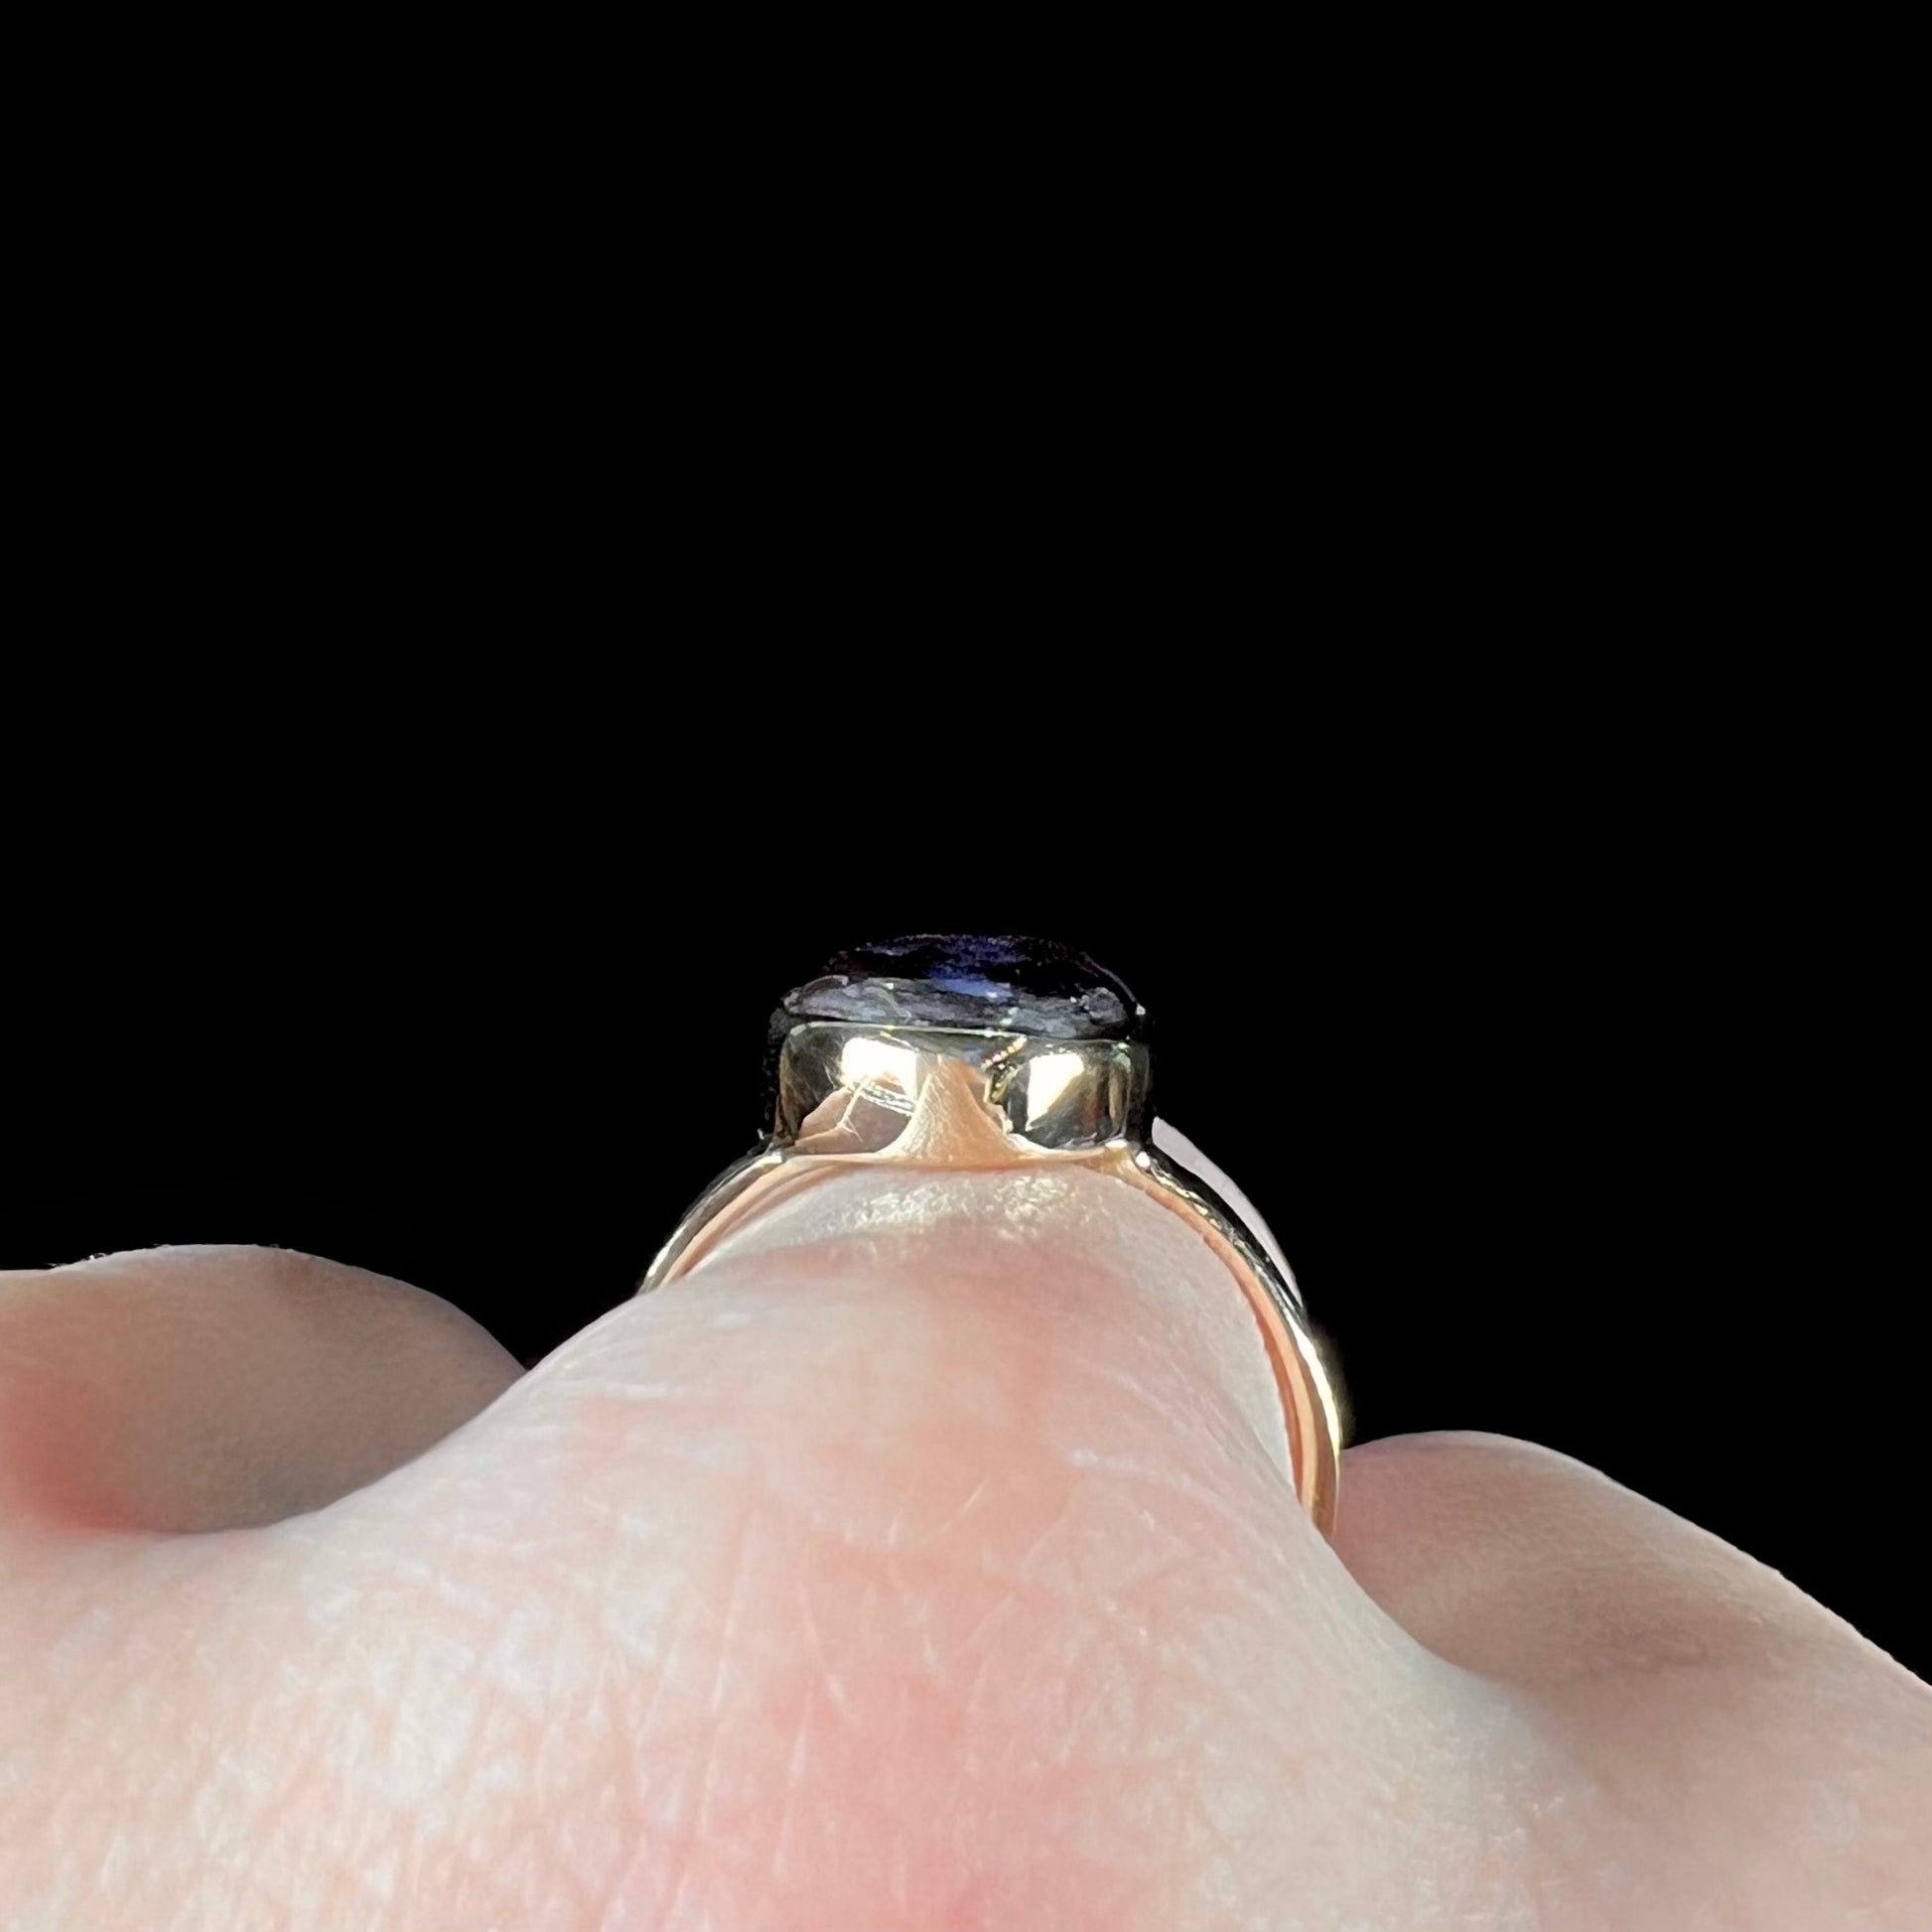 A handmade ladies' yellow gold boulder opal ring.  The opal is a natural purple Yowah nut boulder opal.